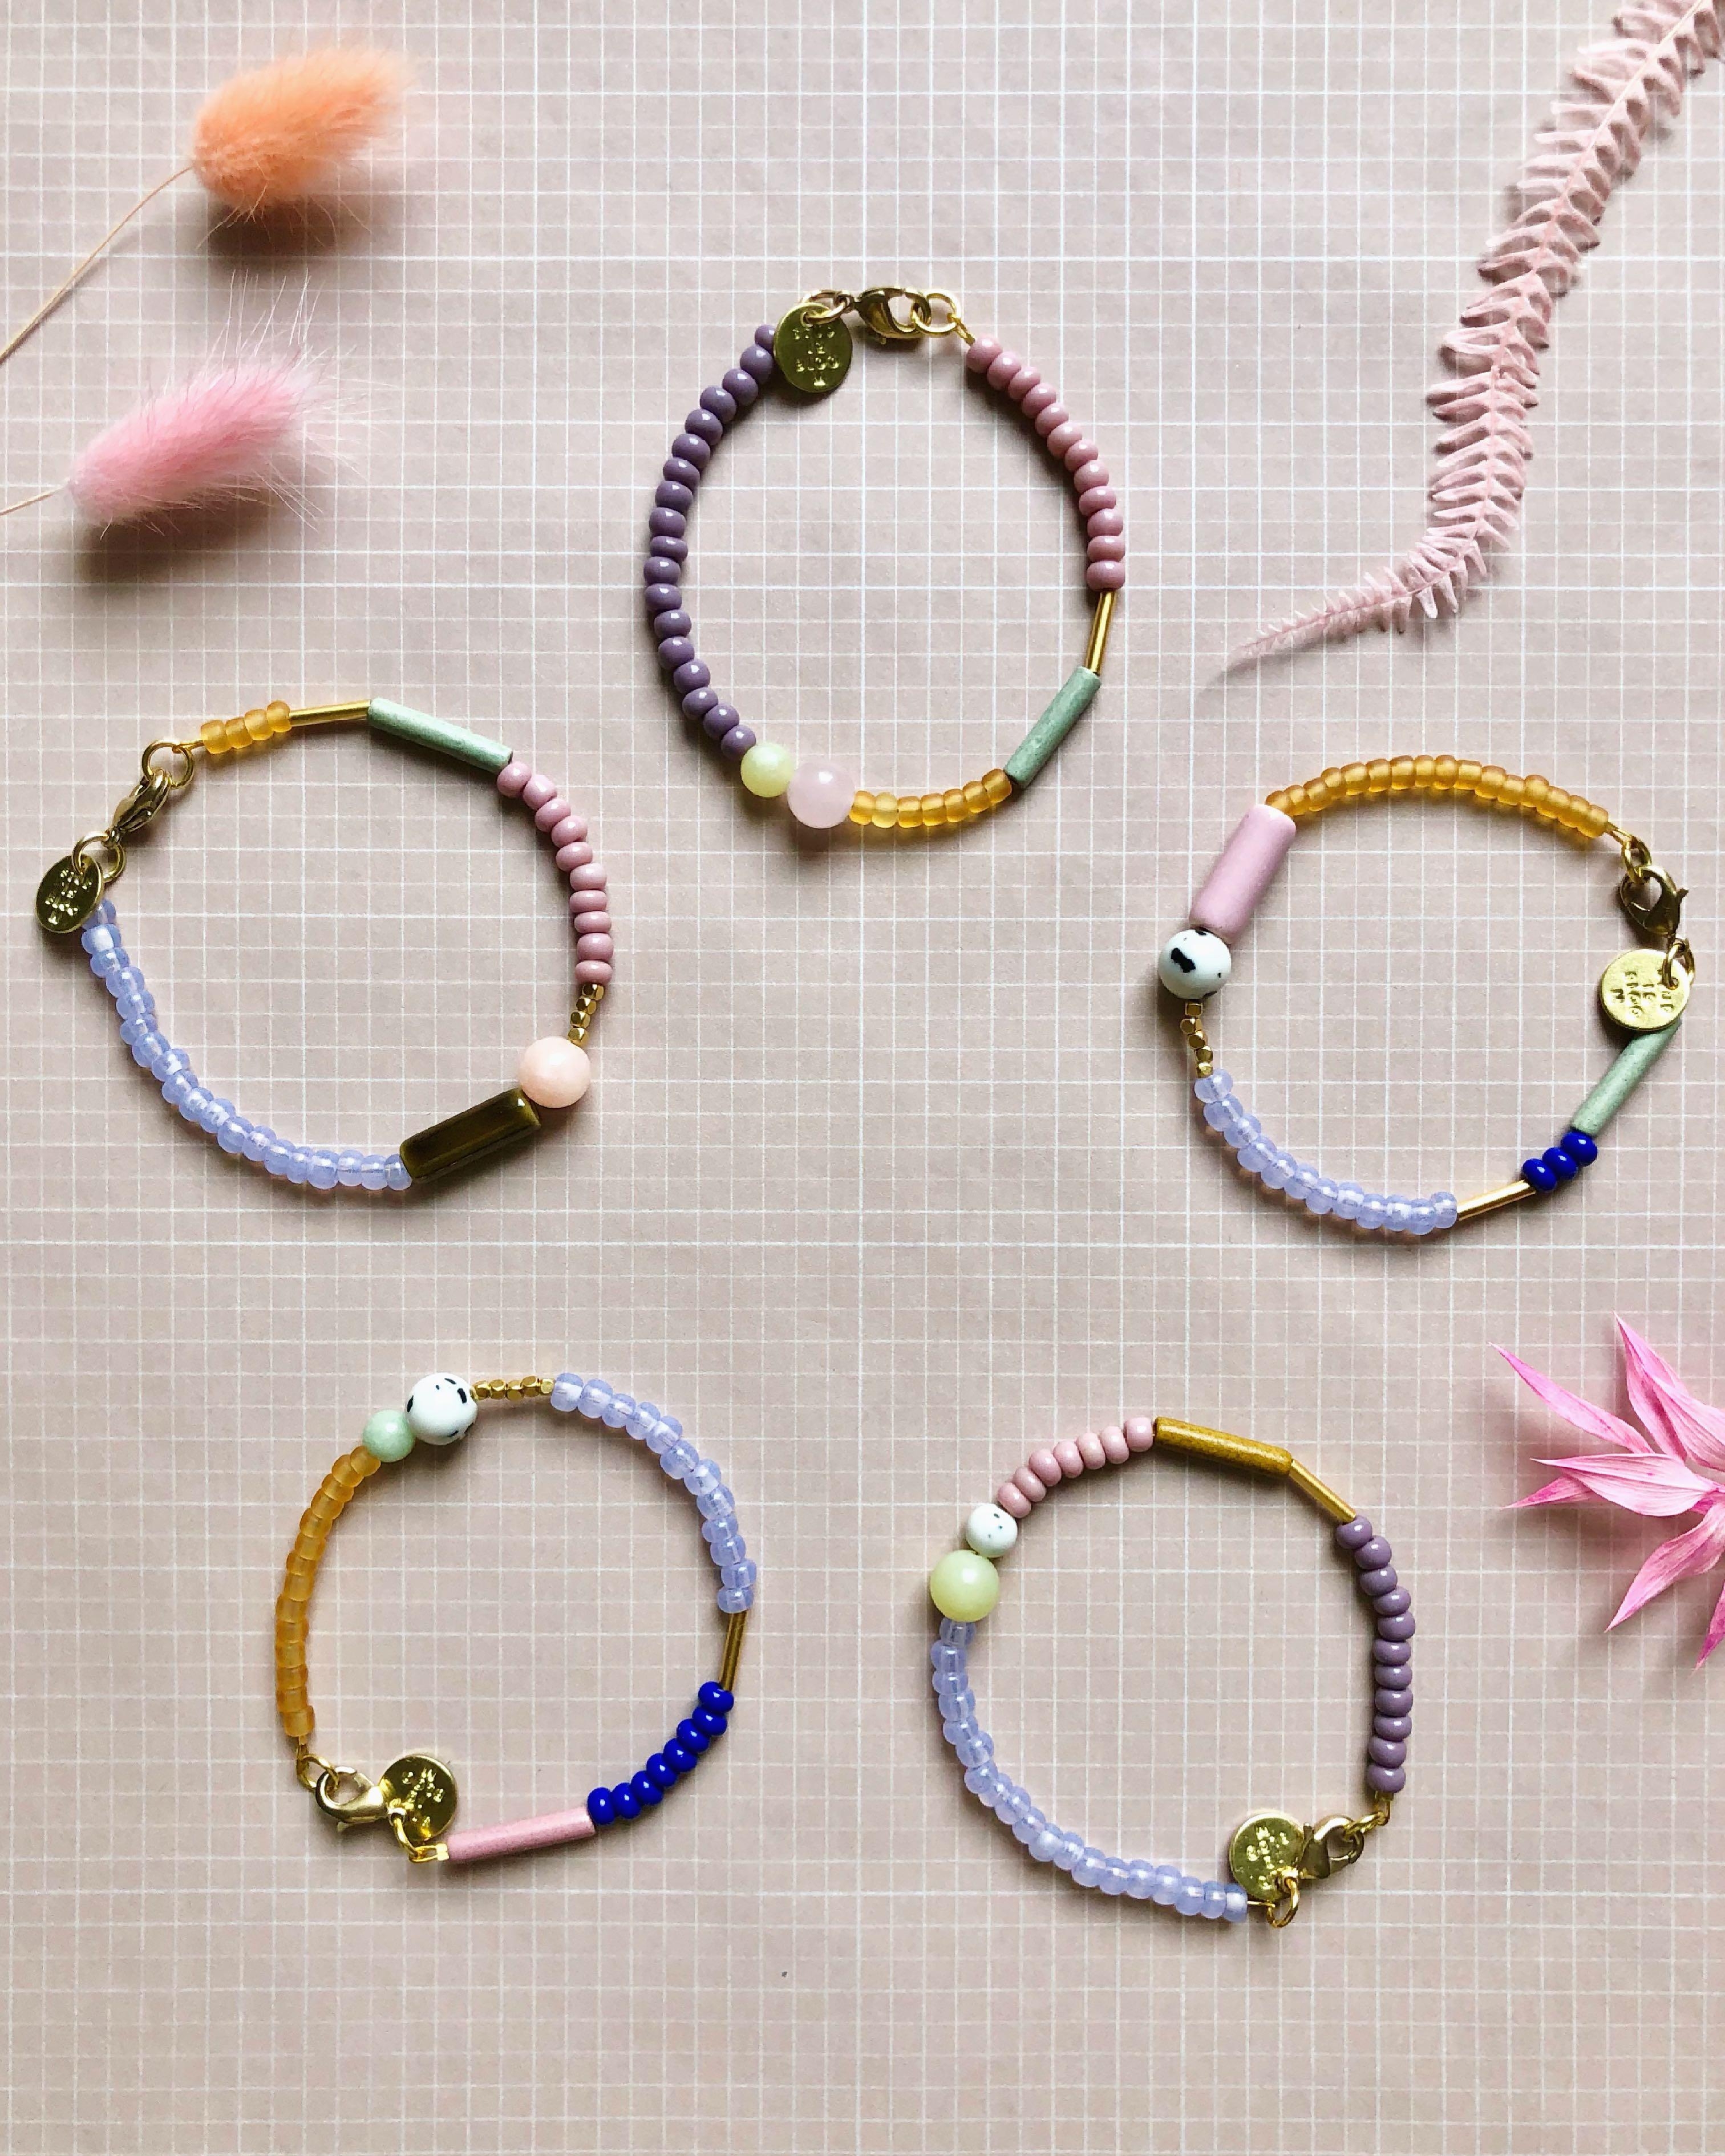 #bracelets #armbänder #friendship #jewelry #handmade #summercolors @Studiobloom_design